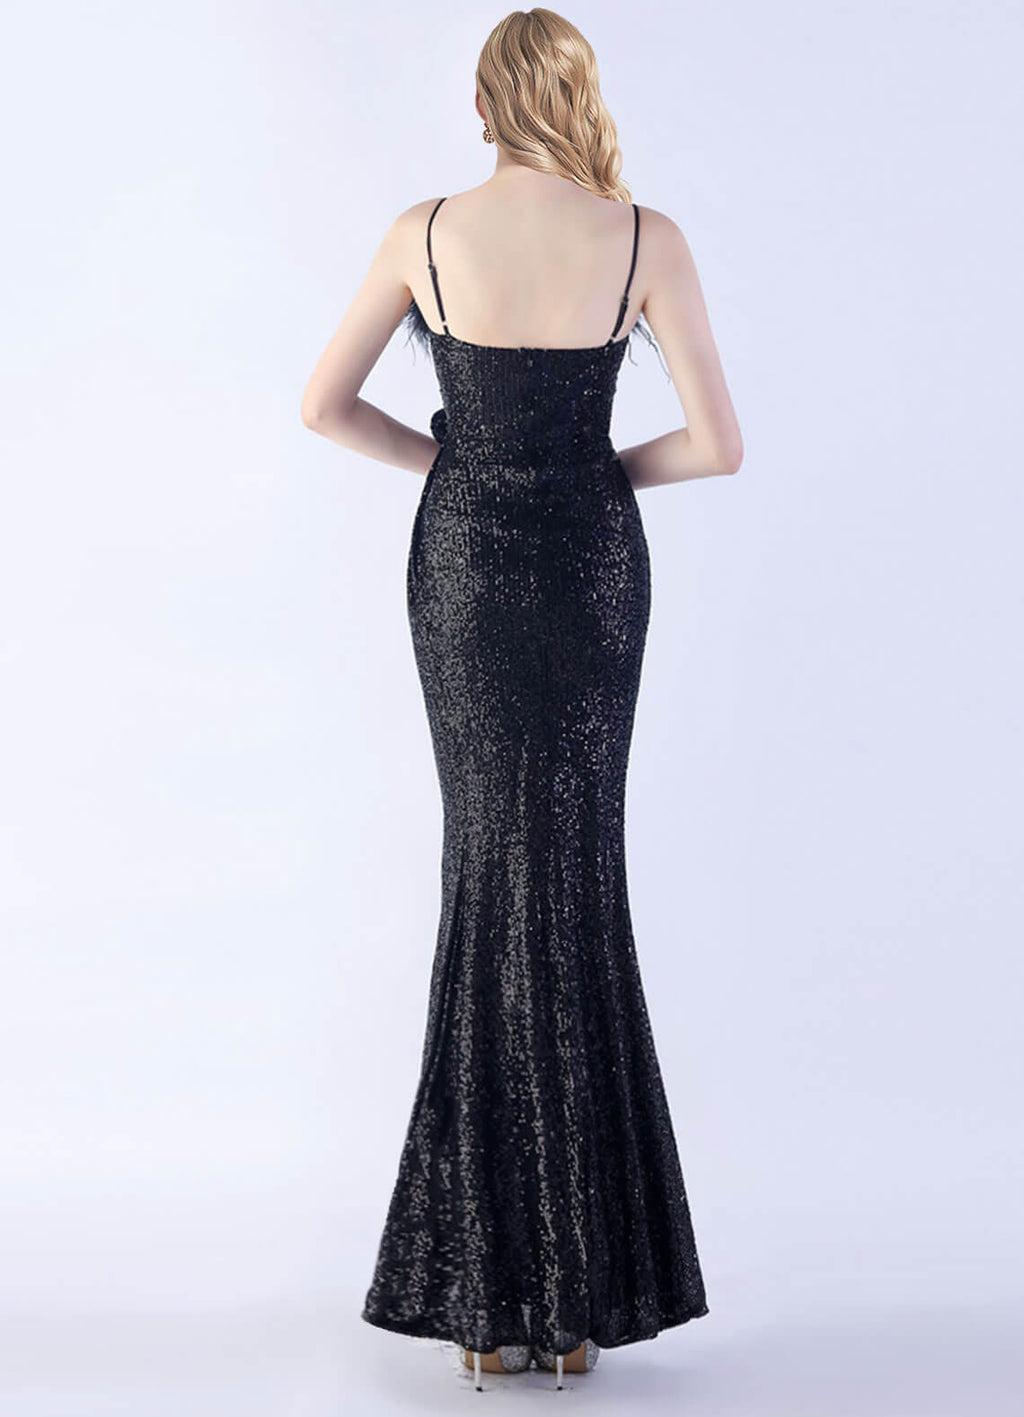 NZ Bridal Black Spaghetti Straps Sequin Maxi Prom Dress 31365 Sadie a